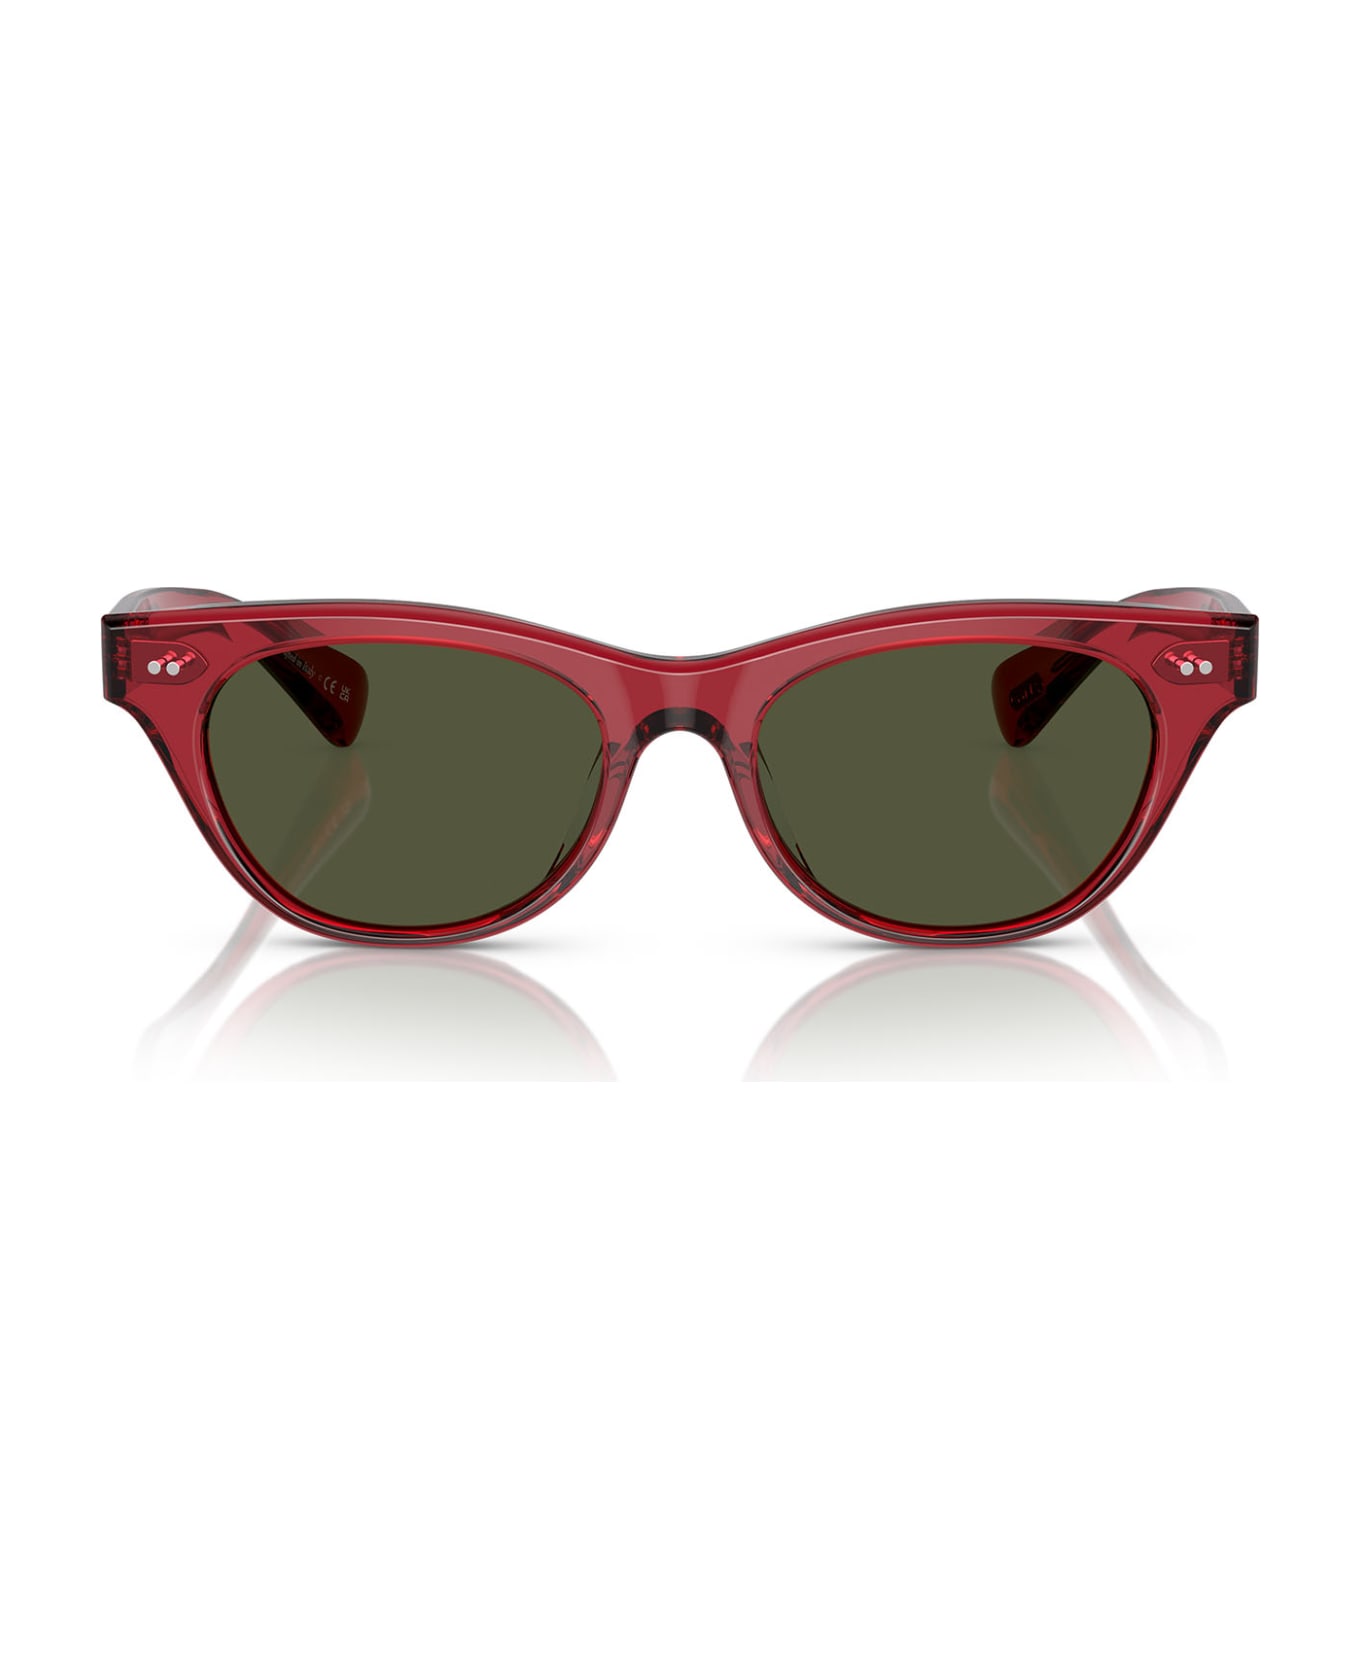 Oliver Peoples Ov5541su Translucent Red Sunglasses - Translucent Red